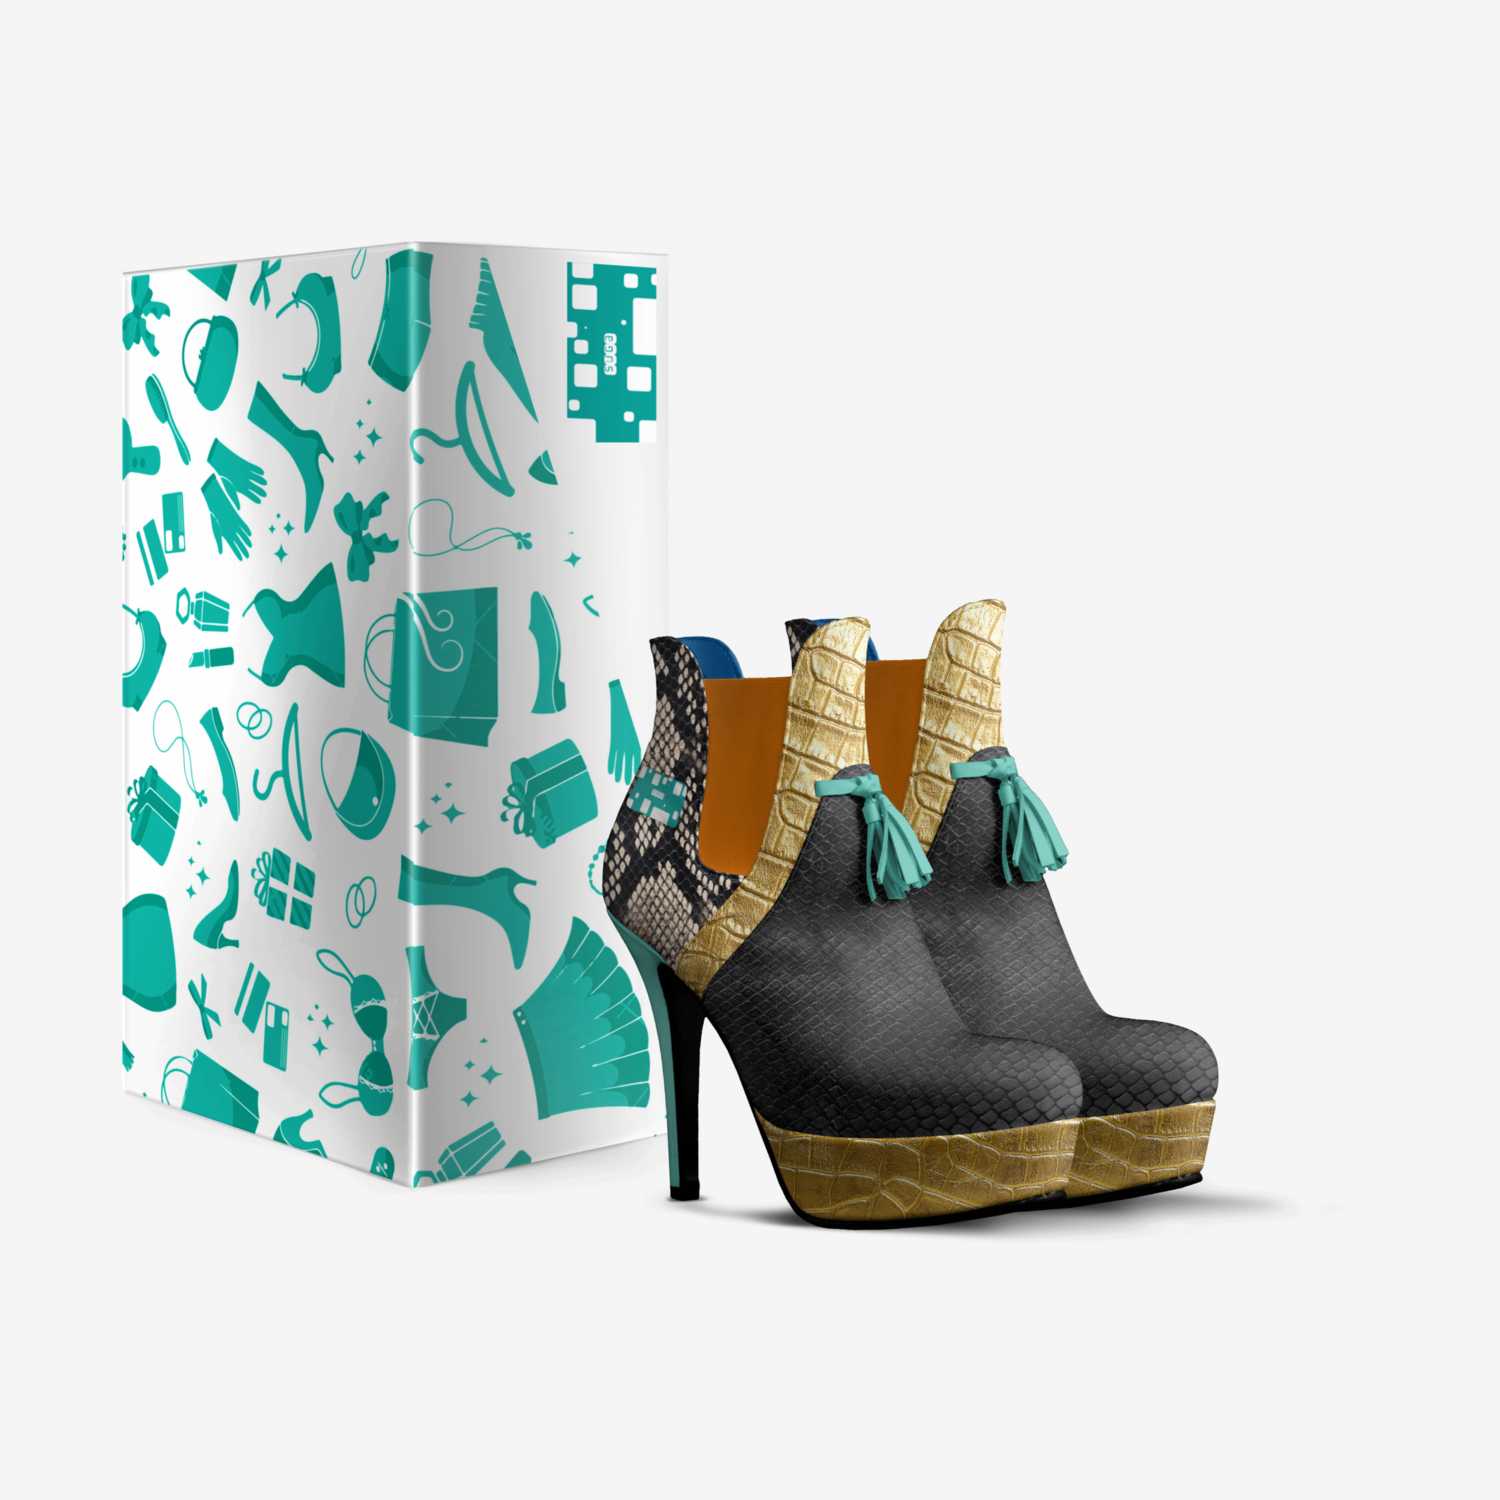 Suga custom made in Italy shoes by Adama Tiye | Box view